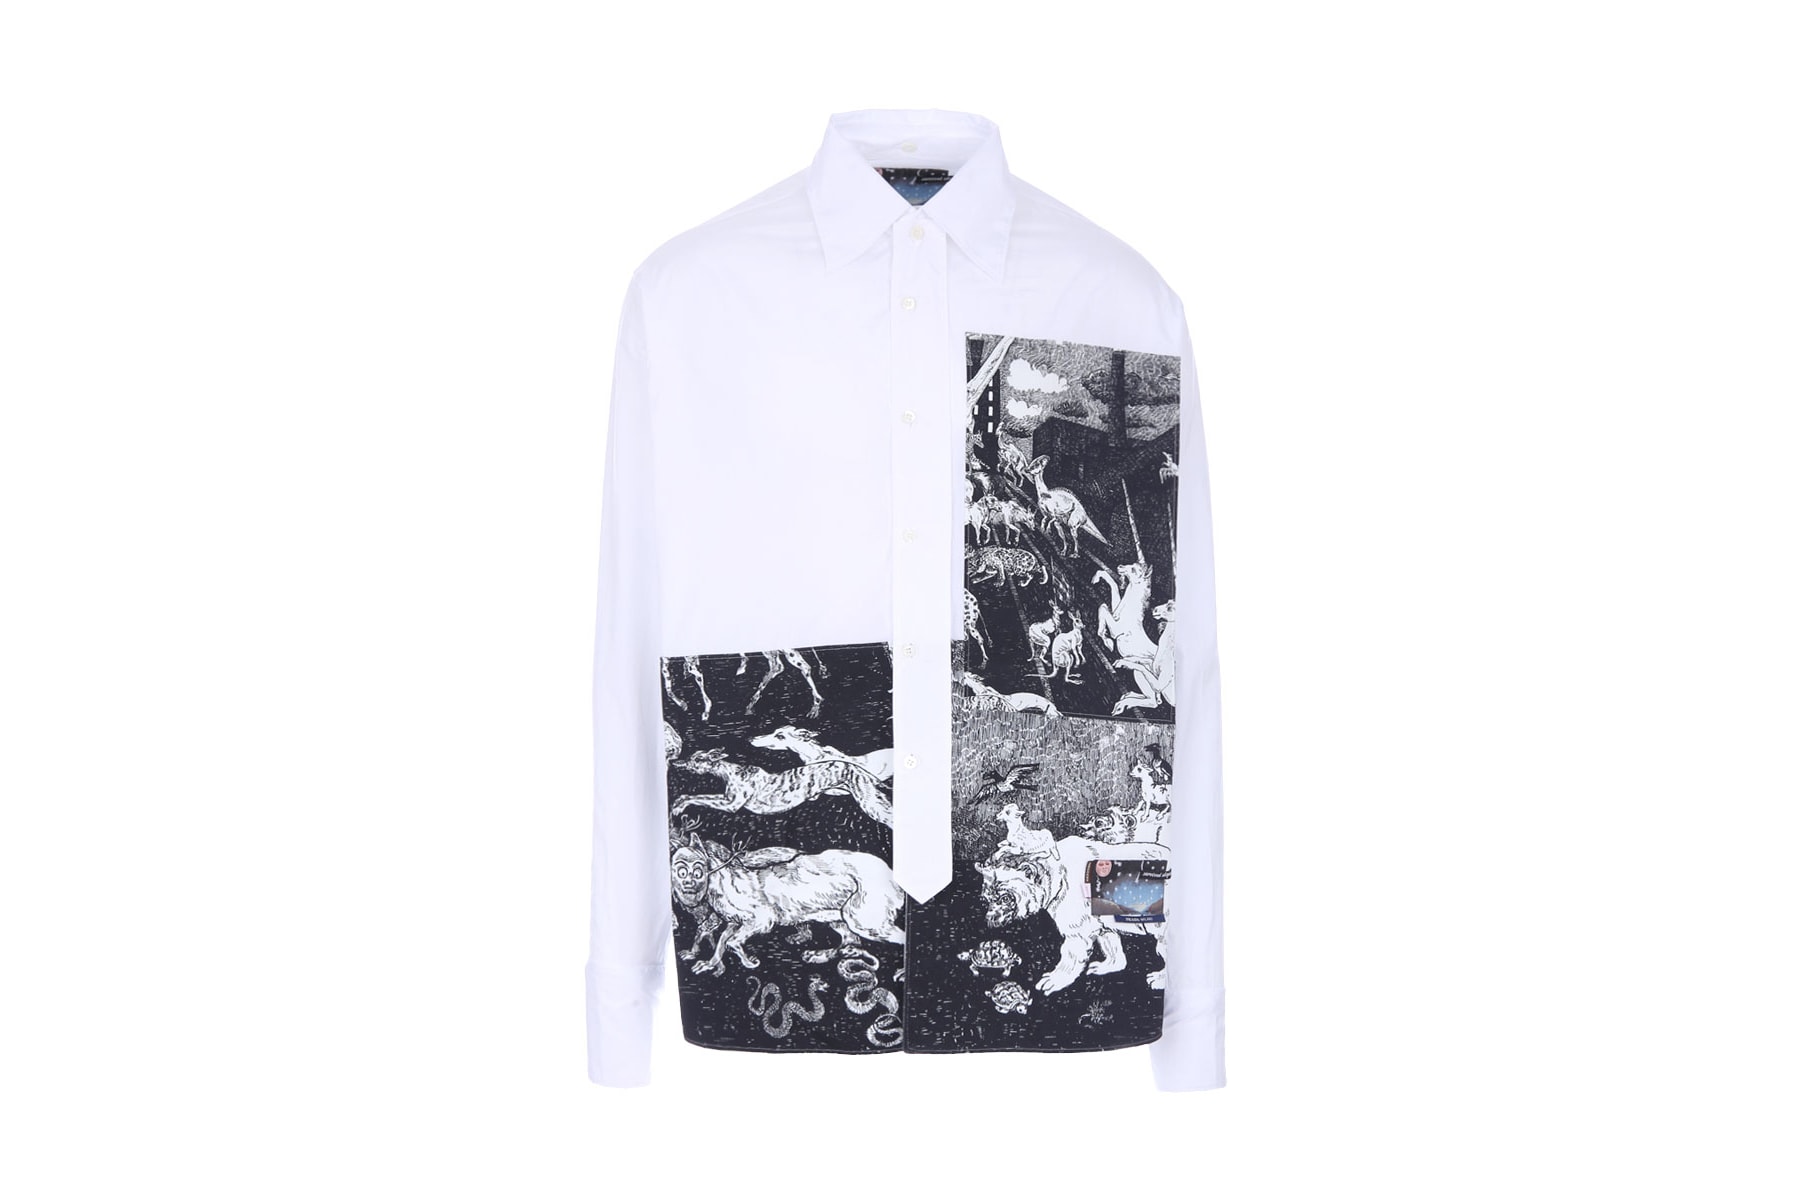 Prada x Chistophe Chemin Shirts Fall 2016 | Hypebeast